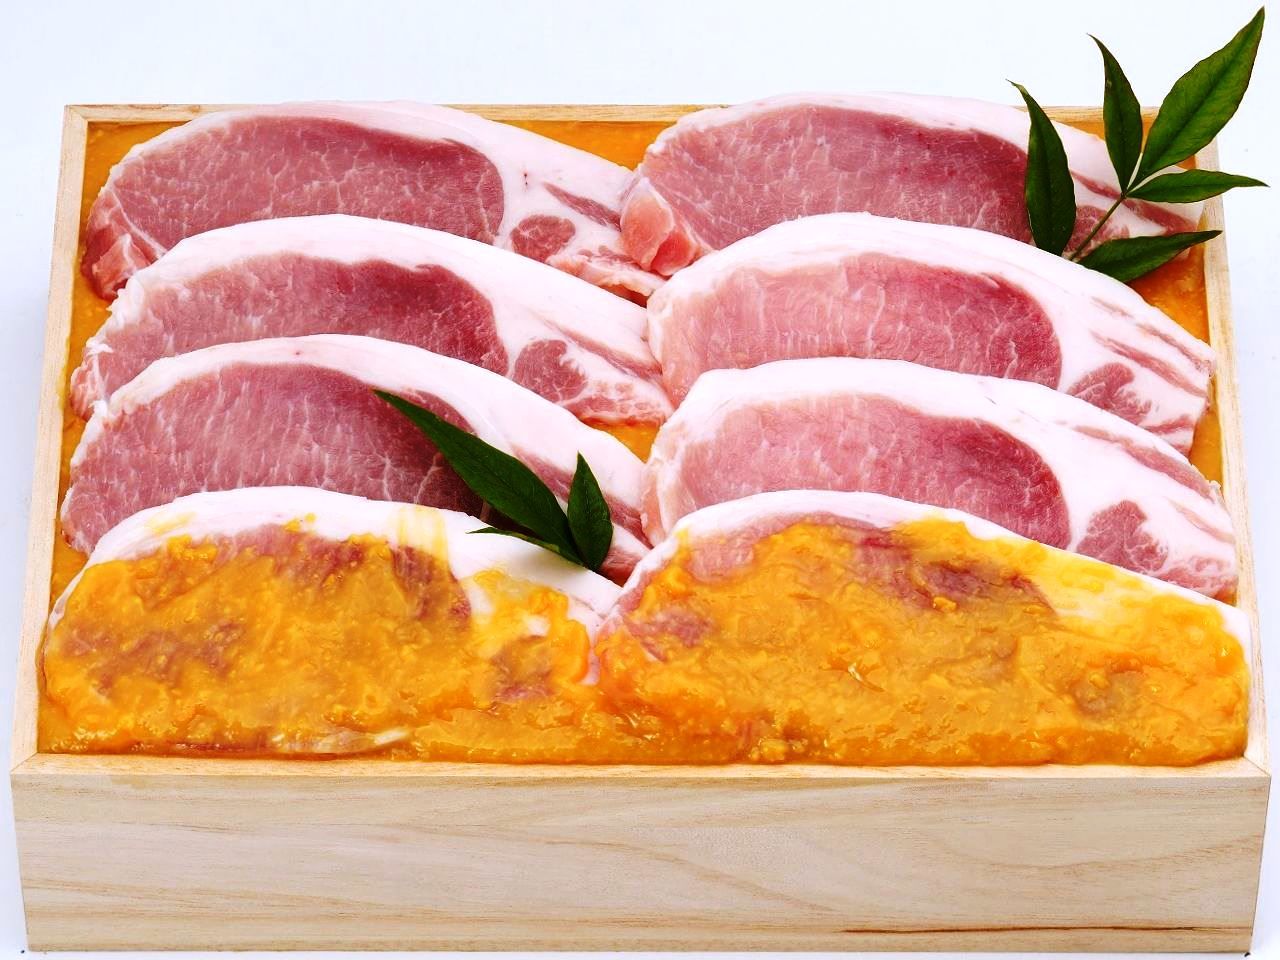 米澤豚一番育ち 糀味噌漬け画像